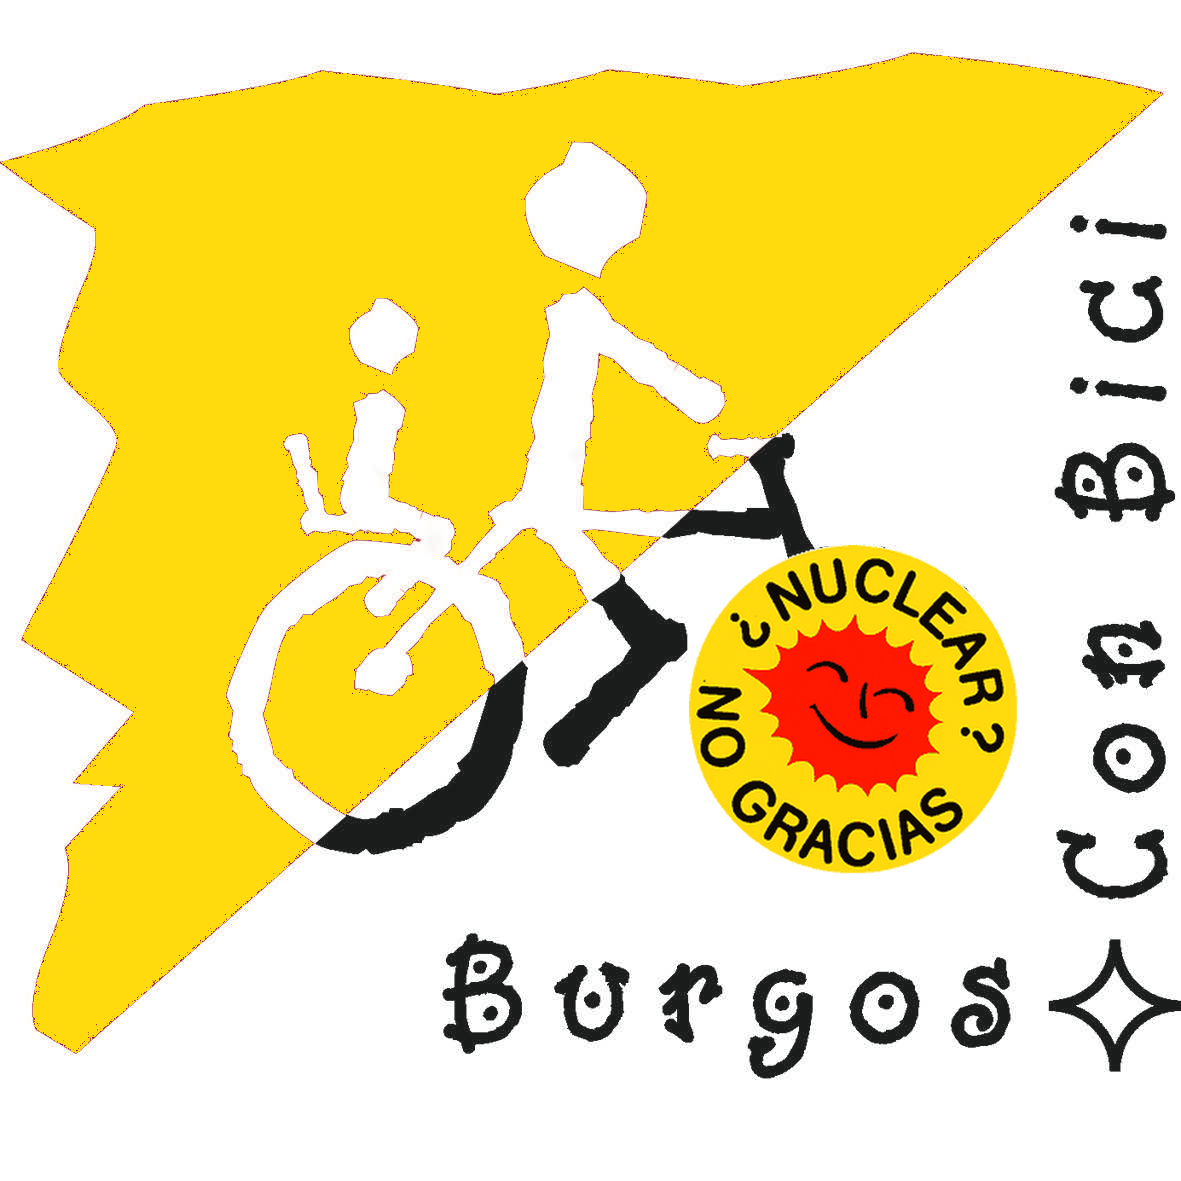 Logotipo burgos Con Bici amarillo. Nuclear no, gracias